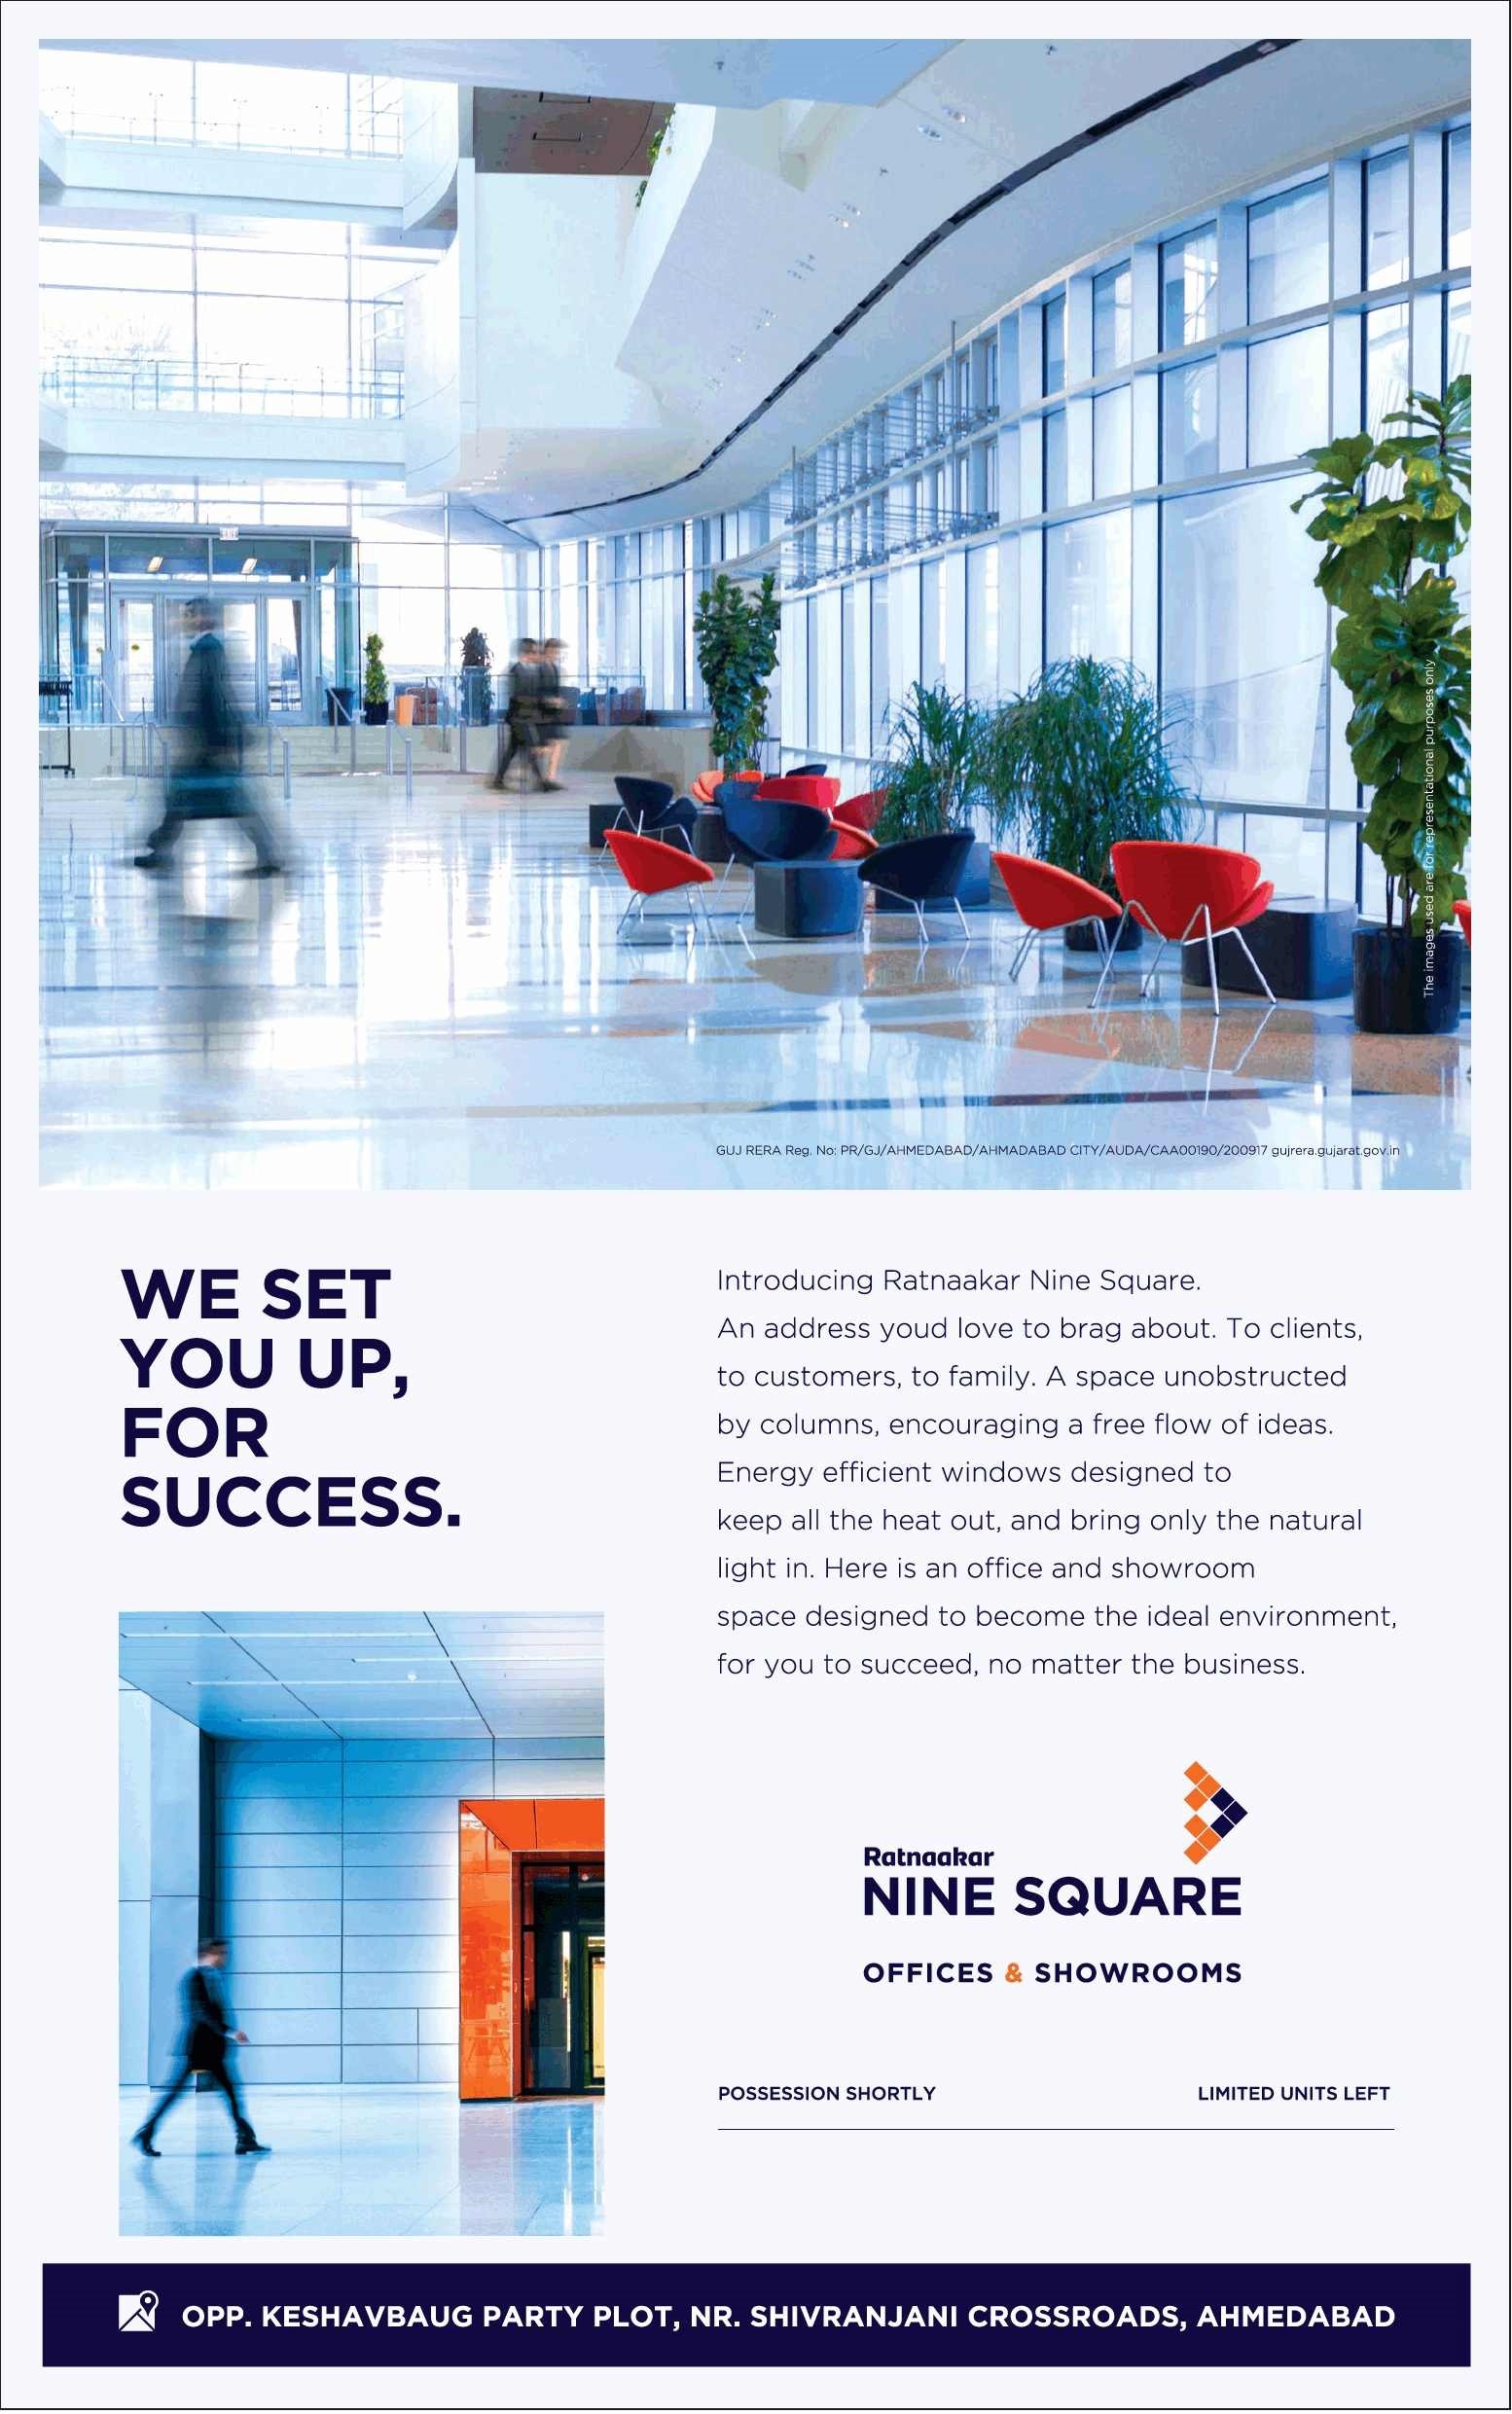 Ratnaakar Nine Square introducing offices & showrooms in Ahmedabad Update